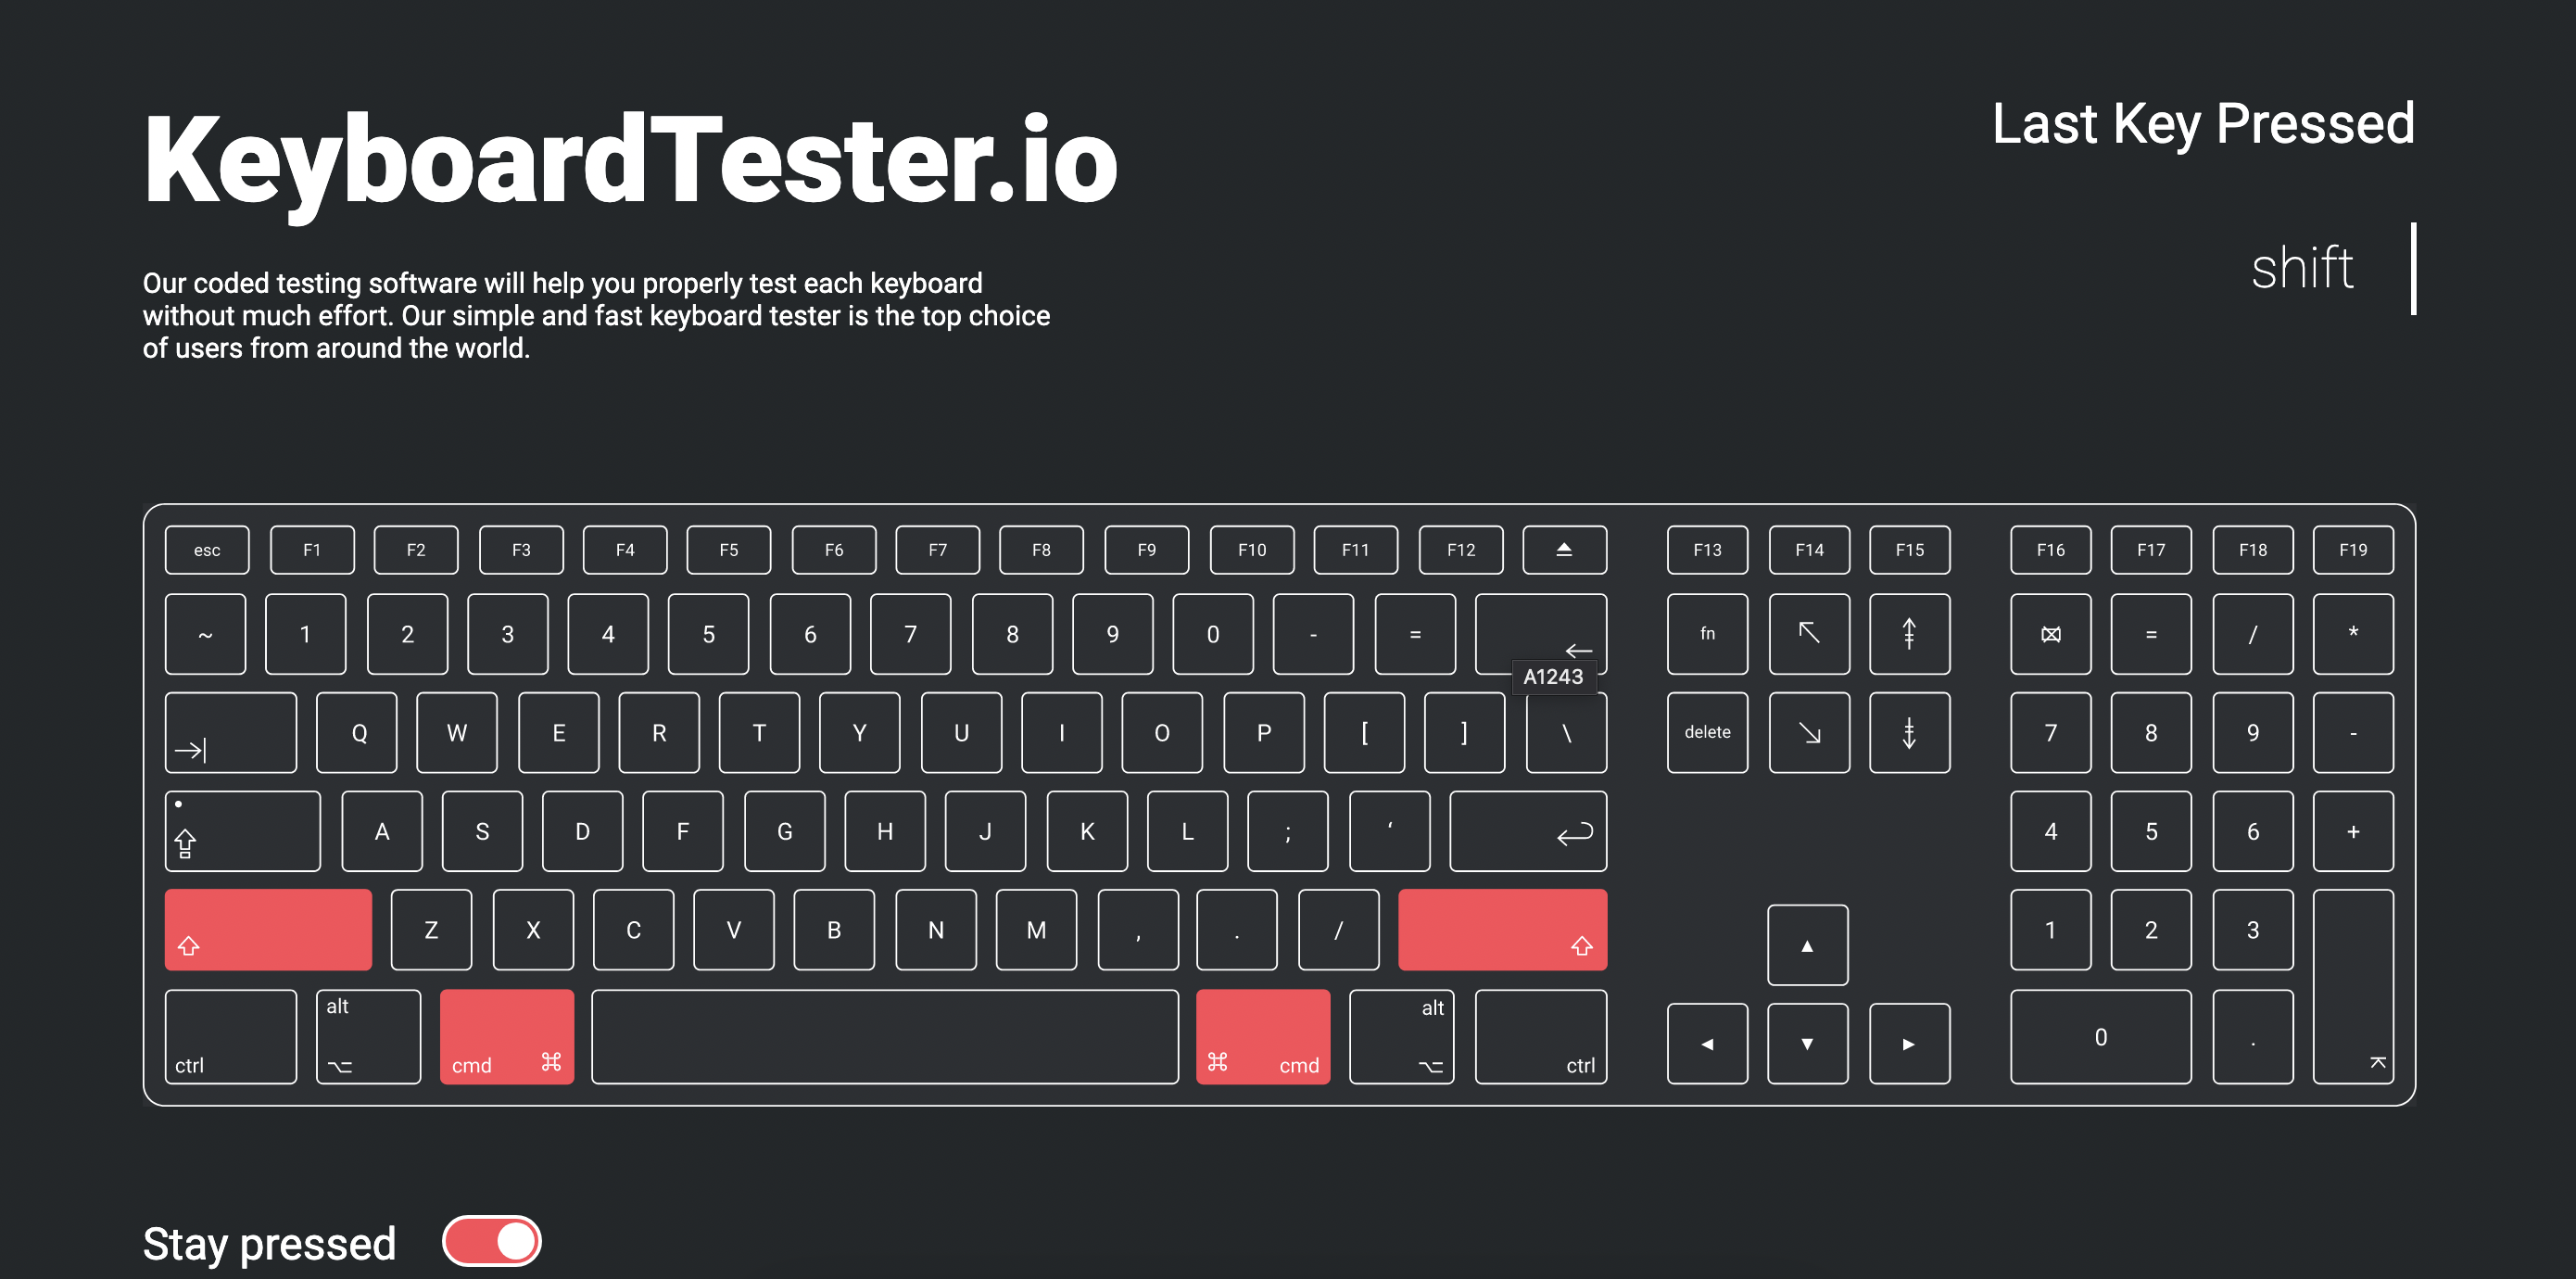 Keyboard Tester